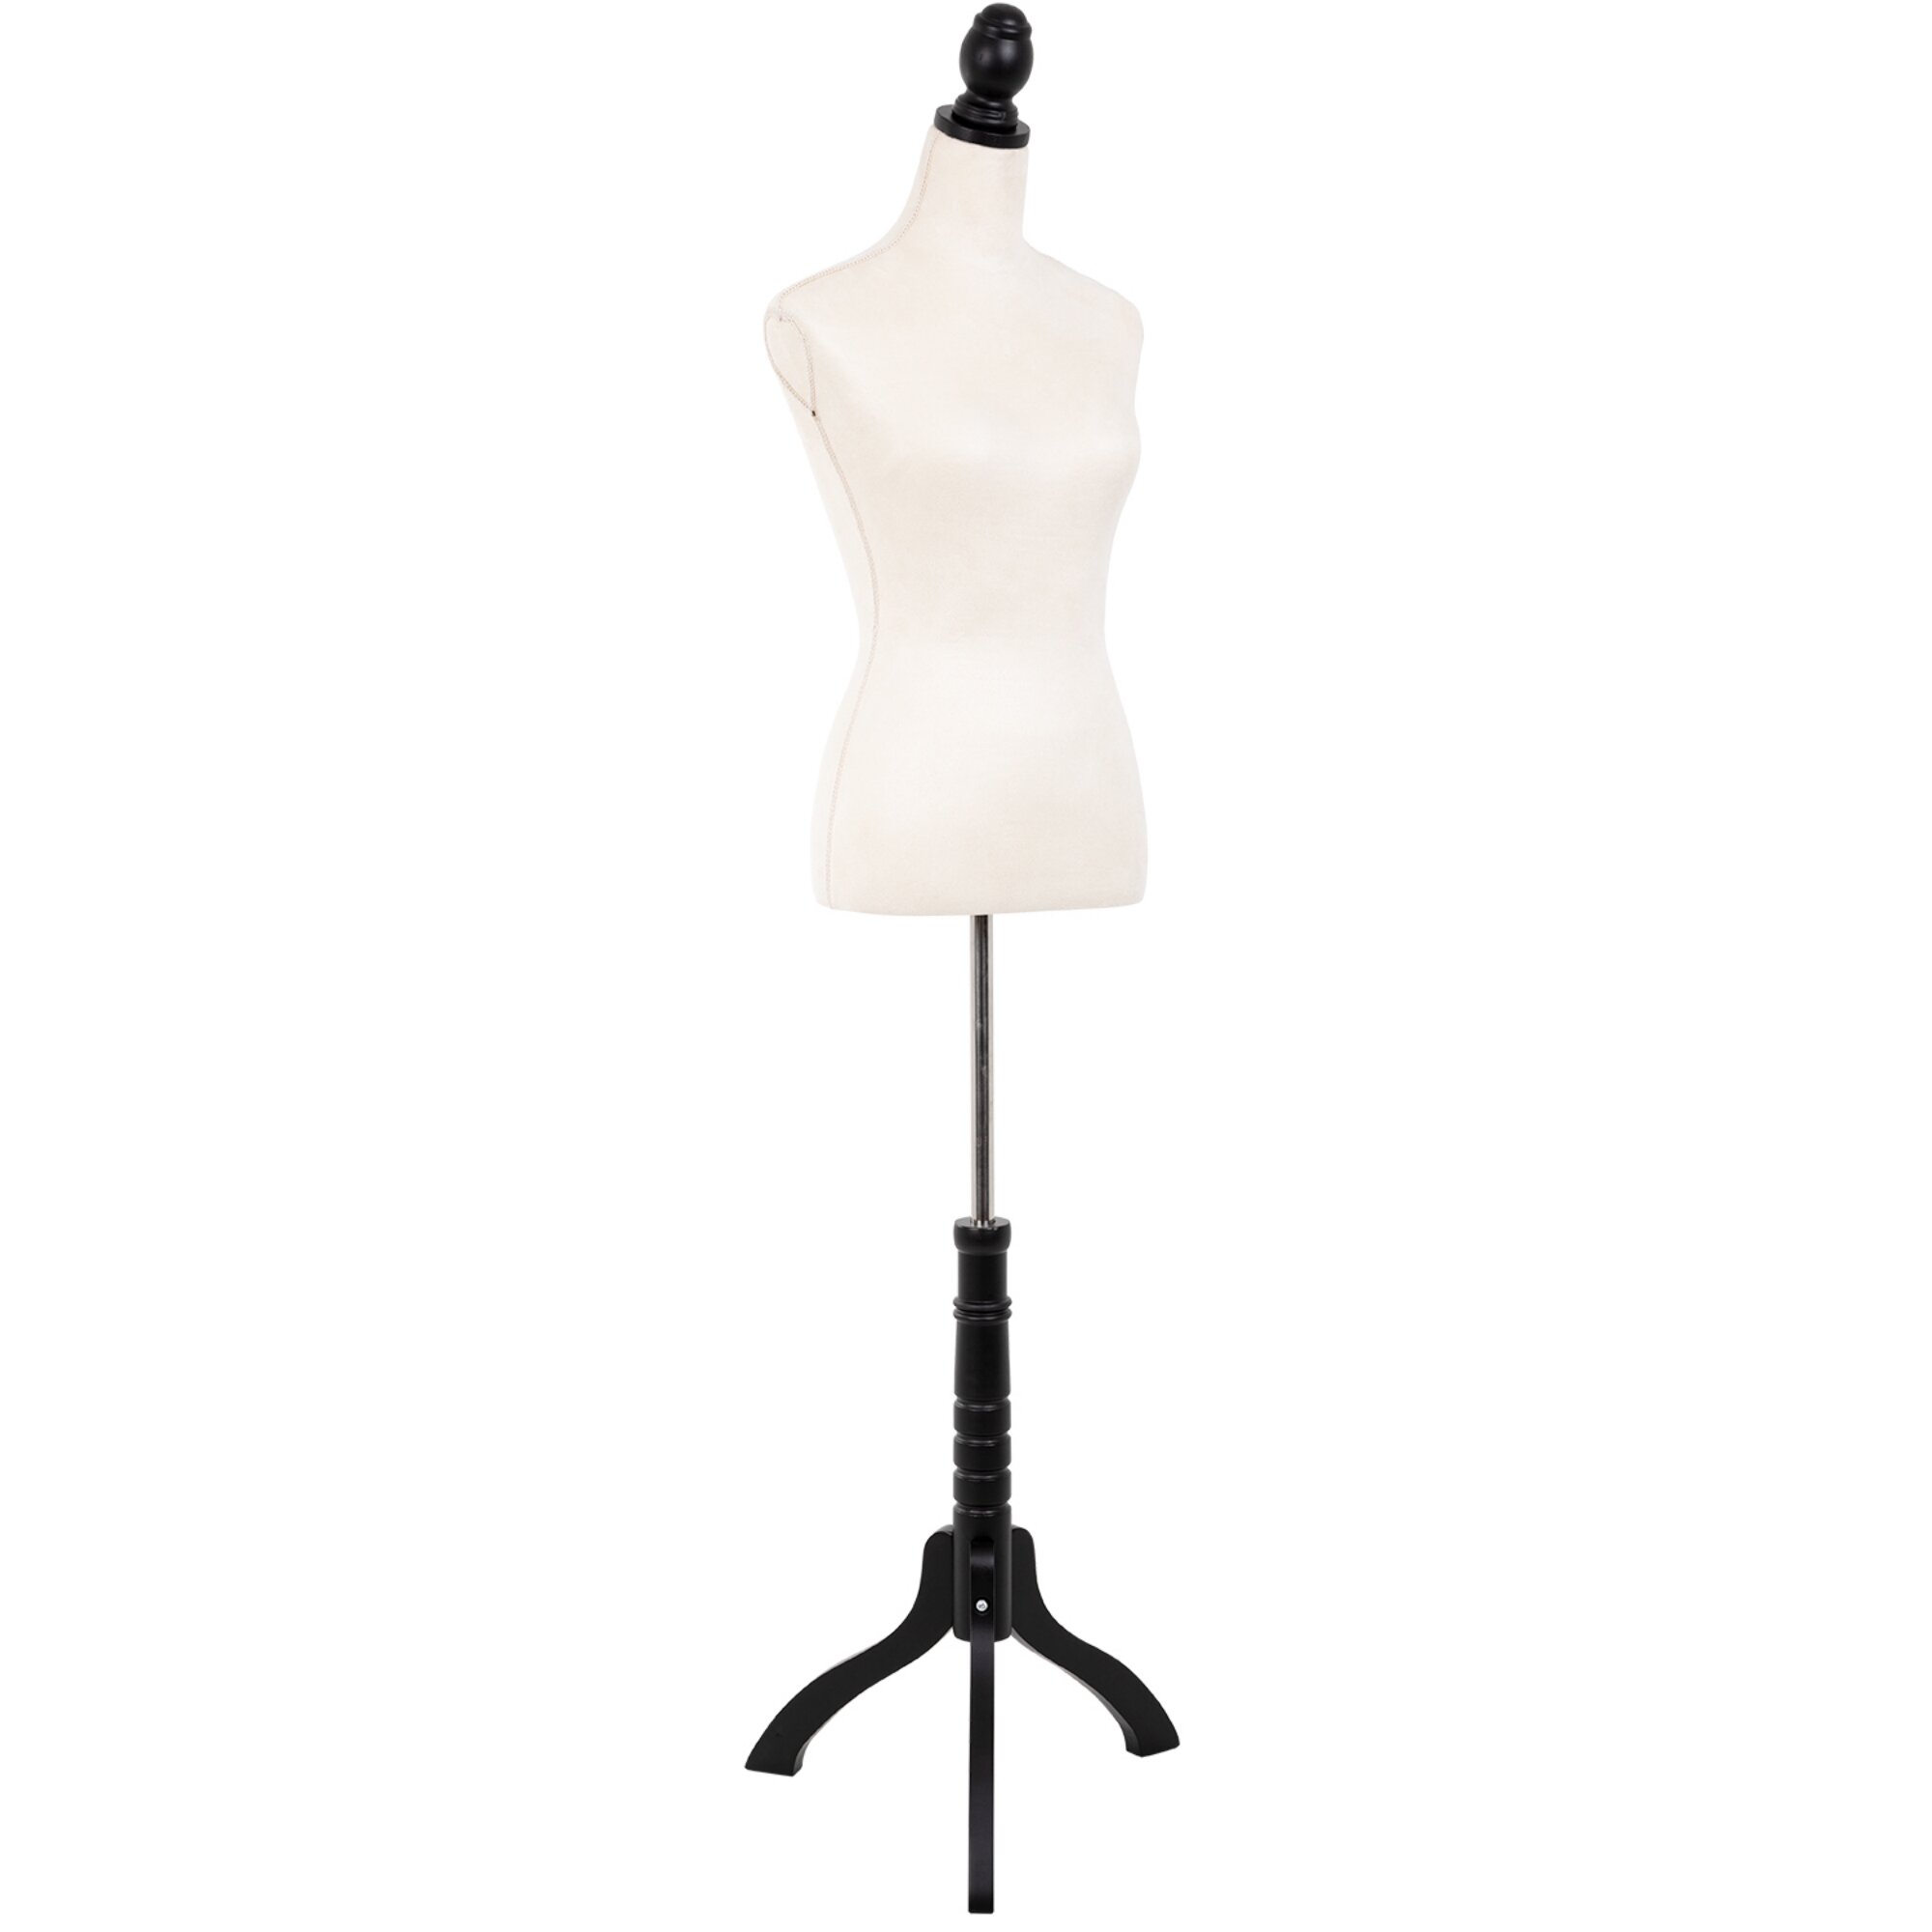 Female Mannequin Torso Dress Form Display Stand Tripod Clothing Base Black Full 